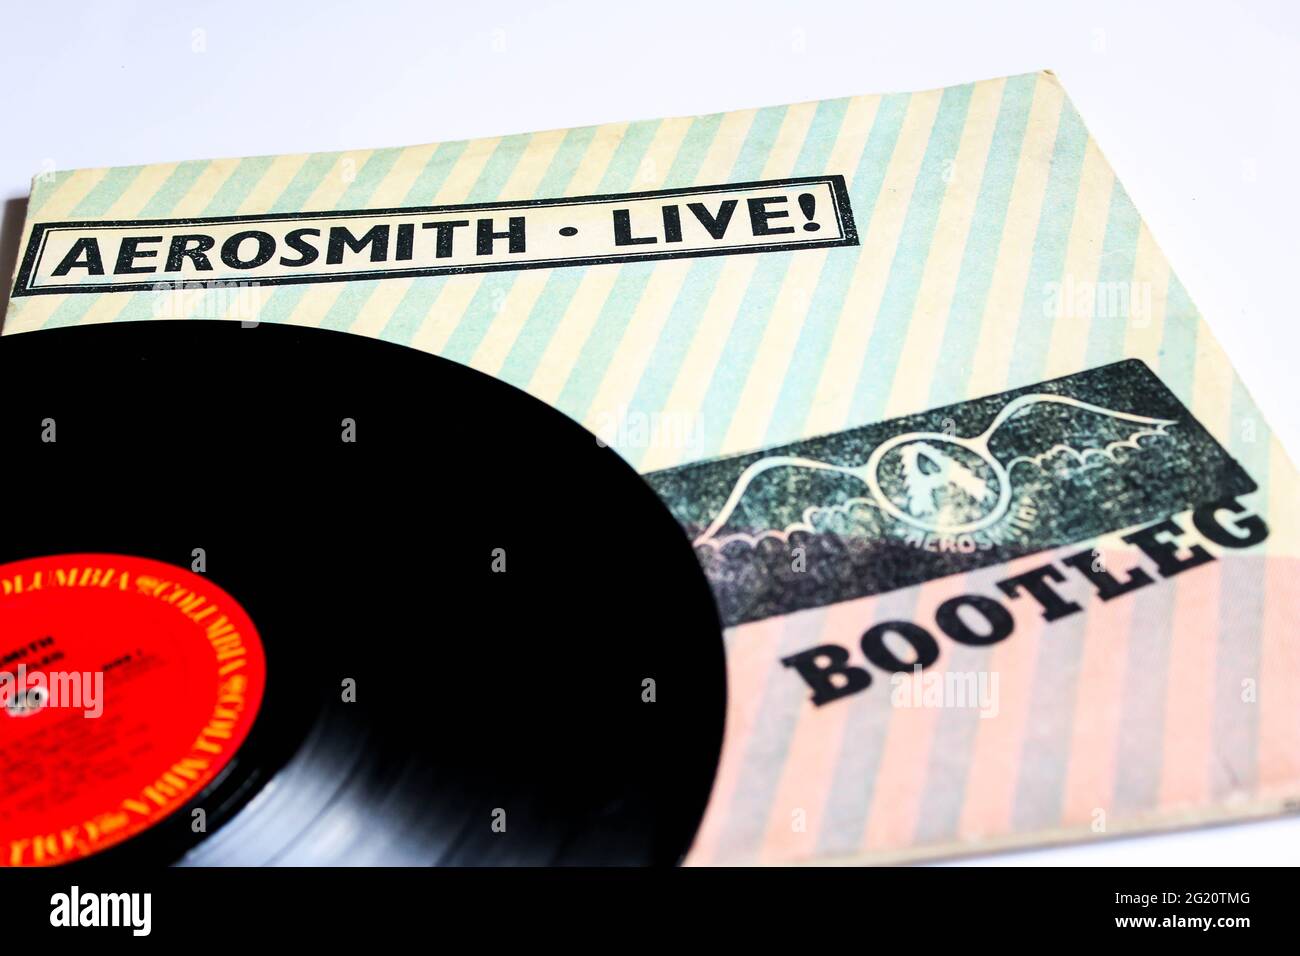 rock band, Aerosmith, music album on vinyl record LP Titled Bootleg. Album Cover Stock Photo -